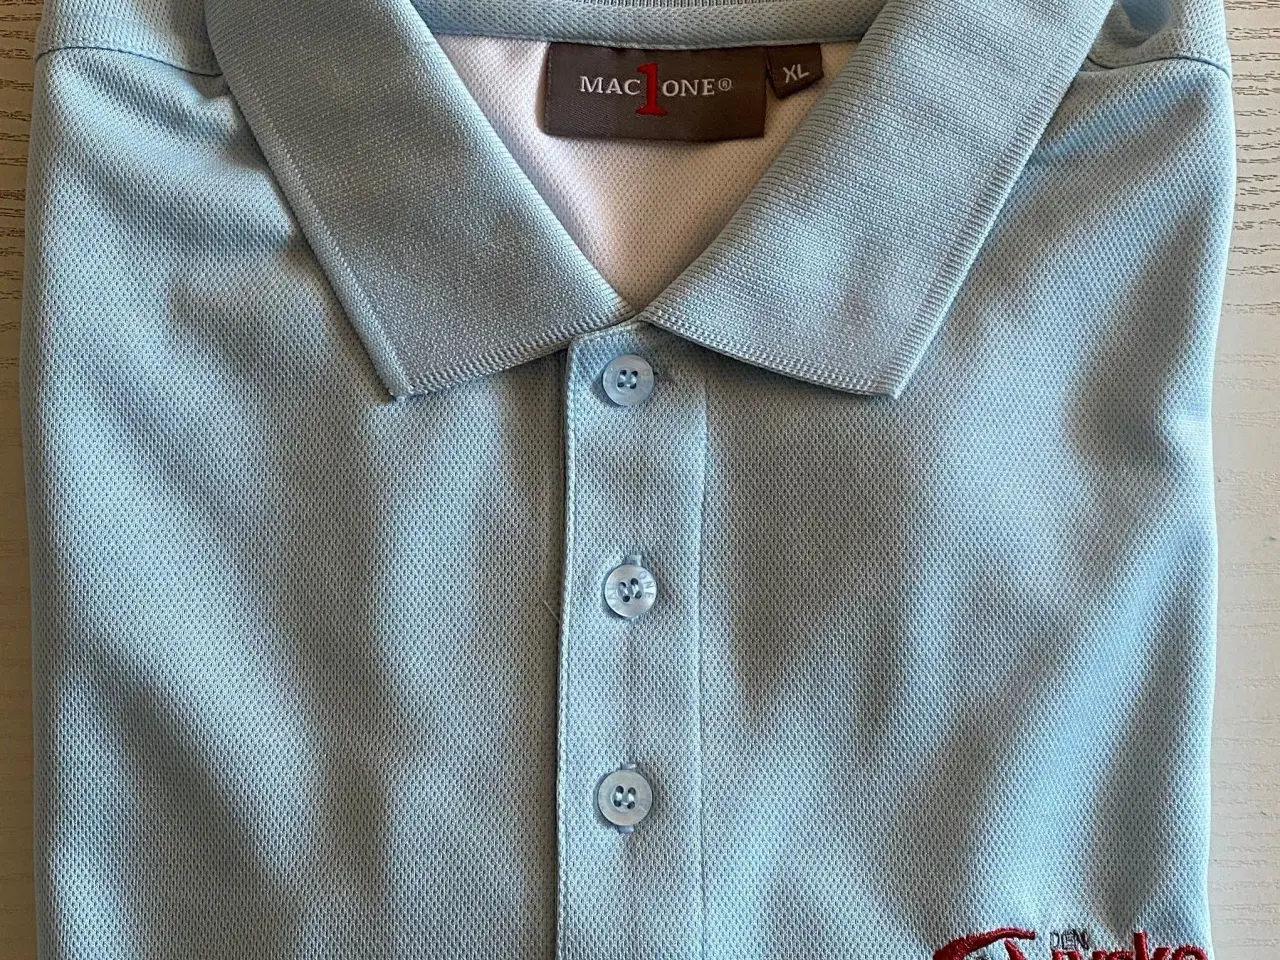 Billede 2 - Polo t-shirt, Mac1one